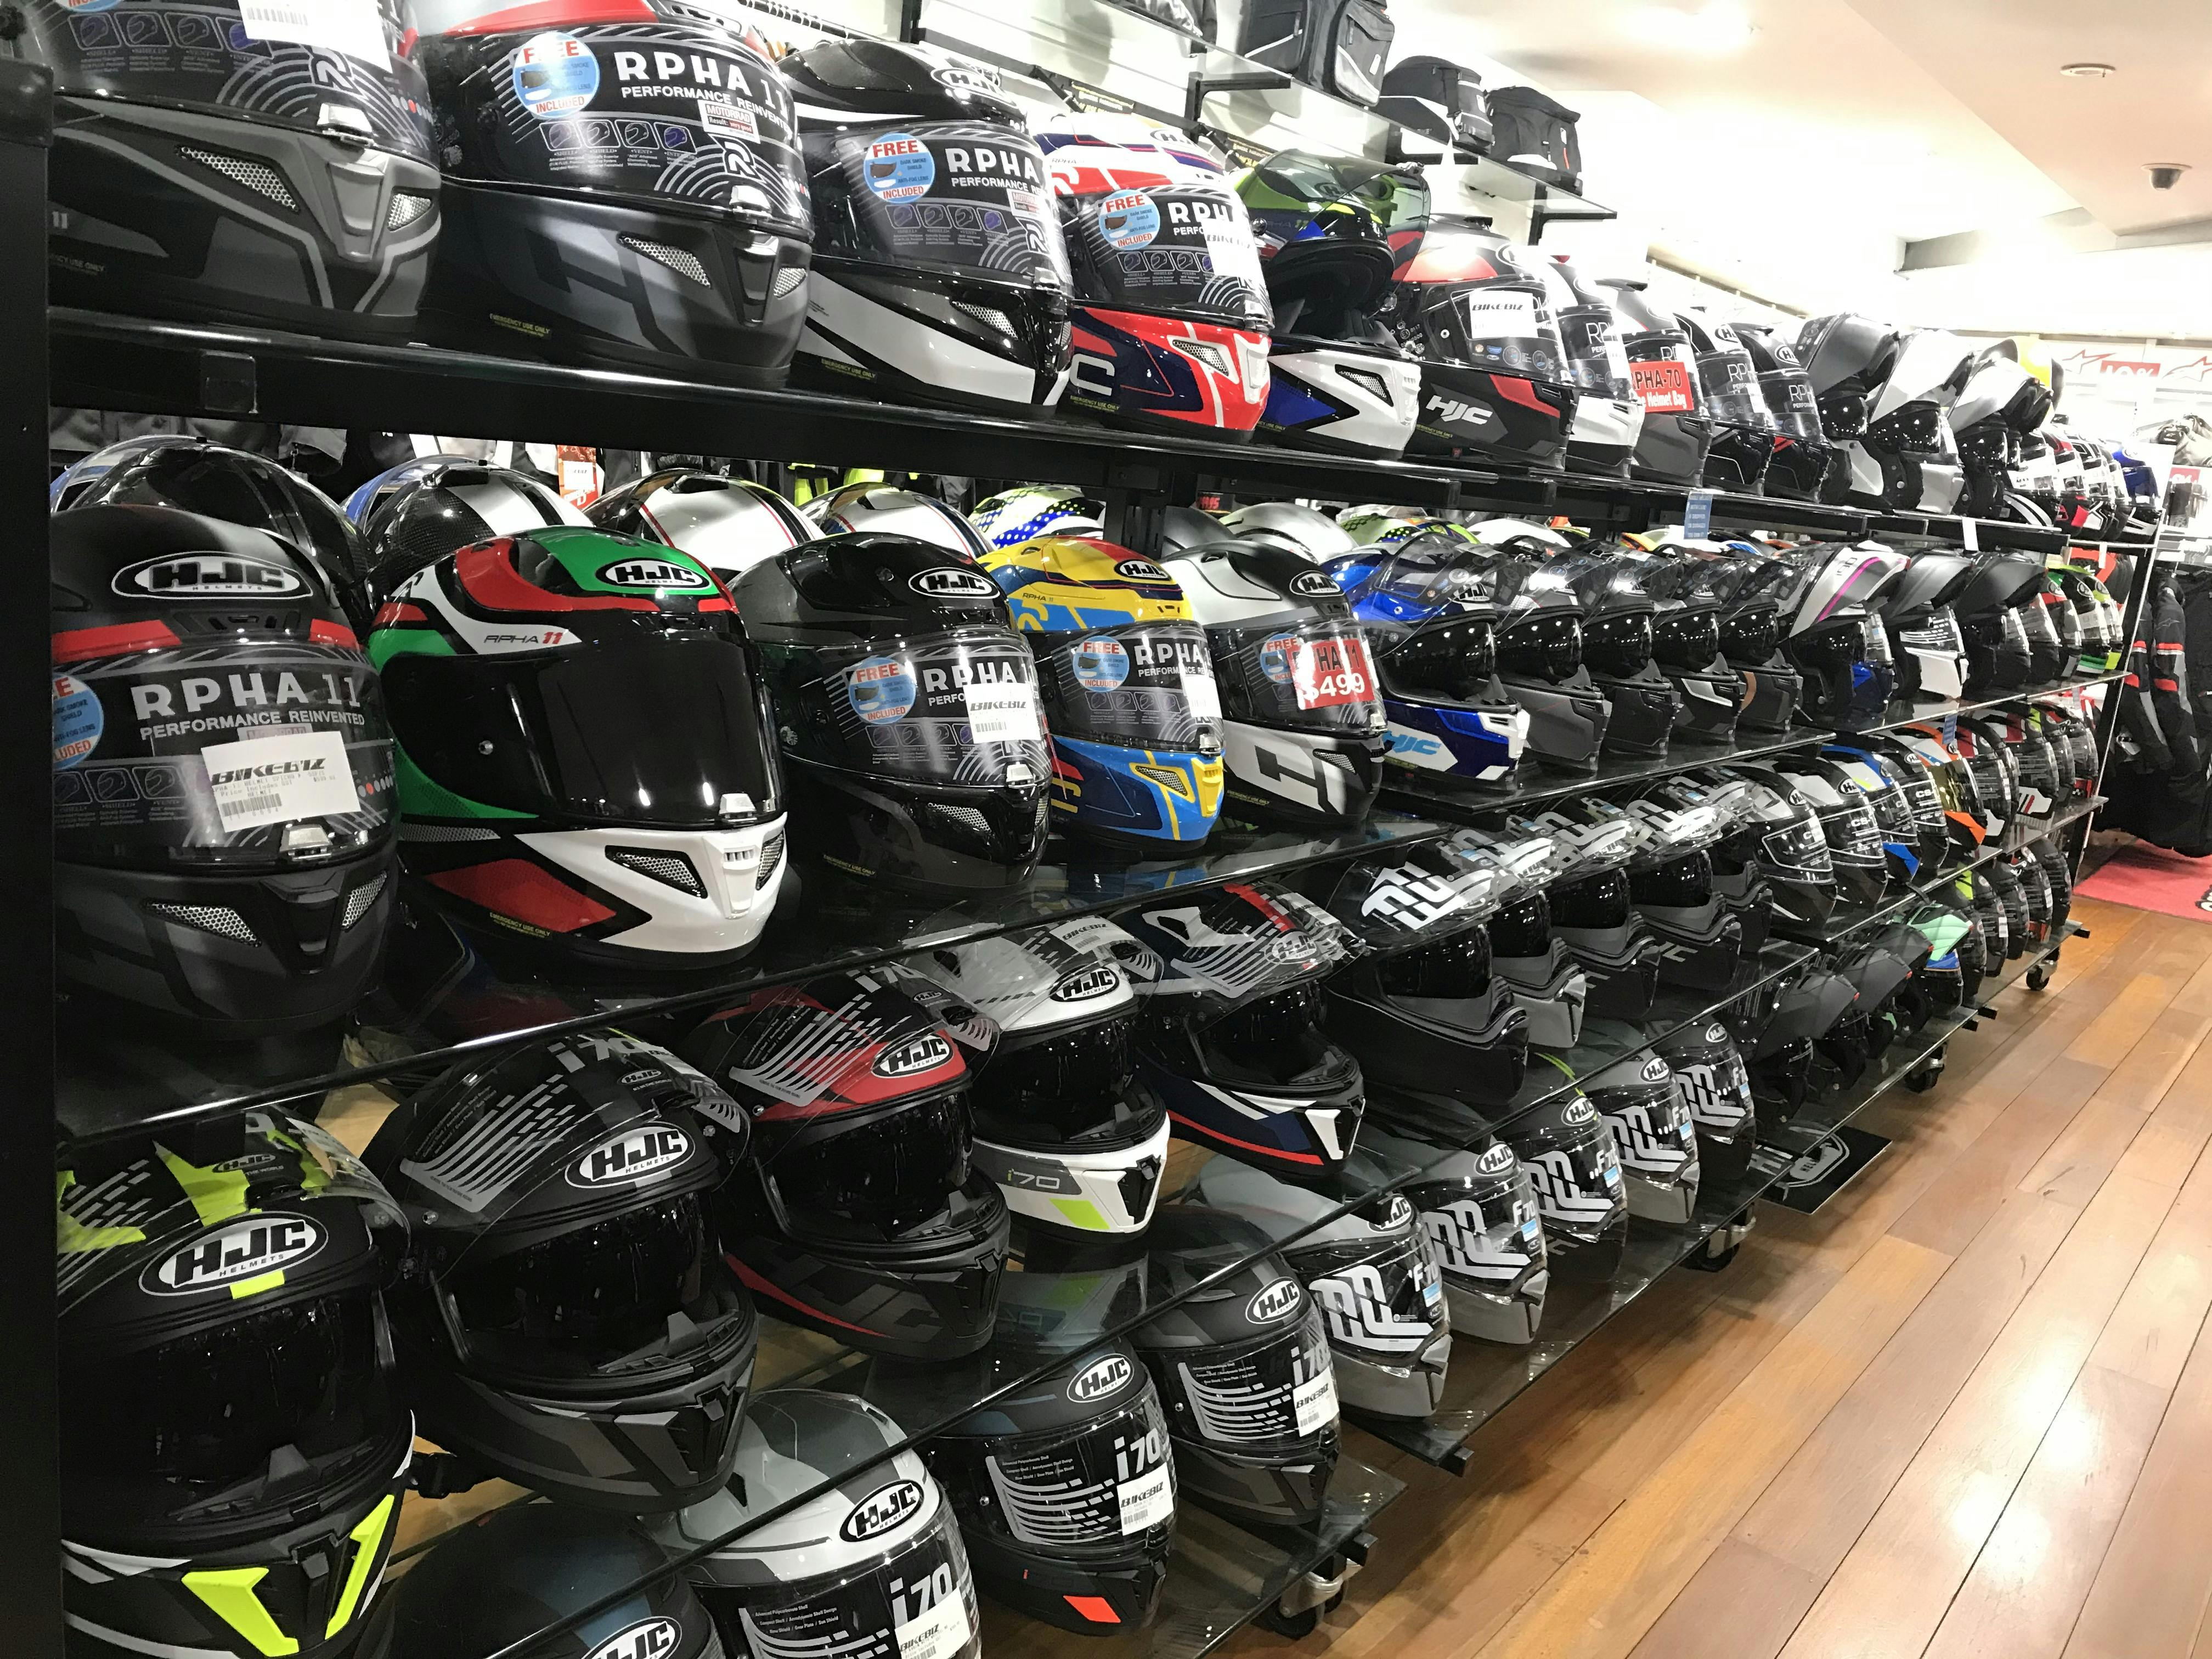 4 shelves filled with helmets